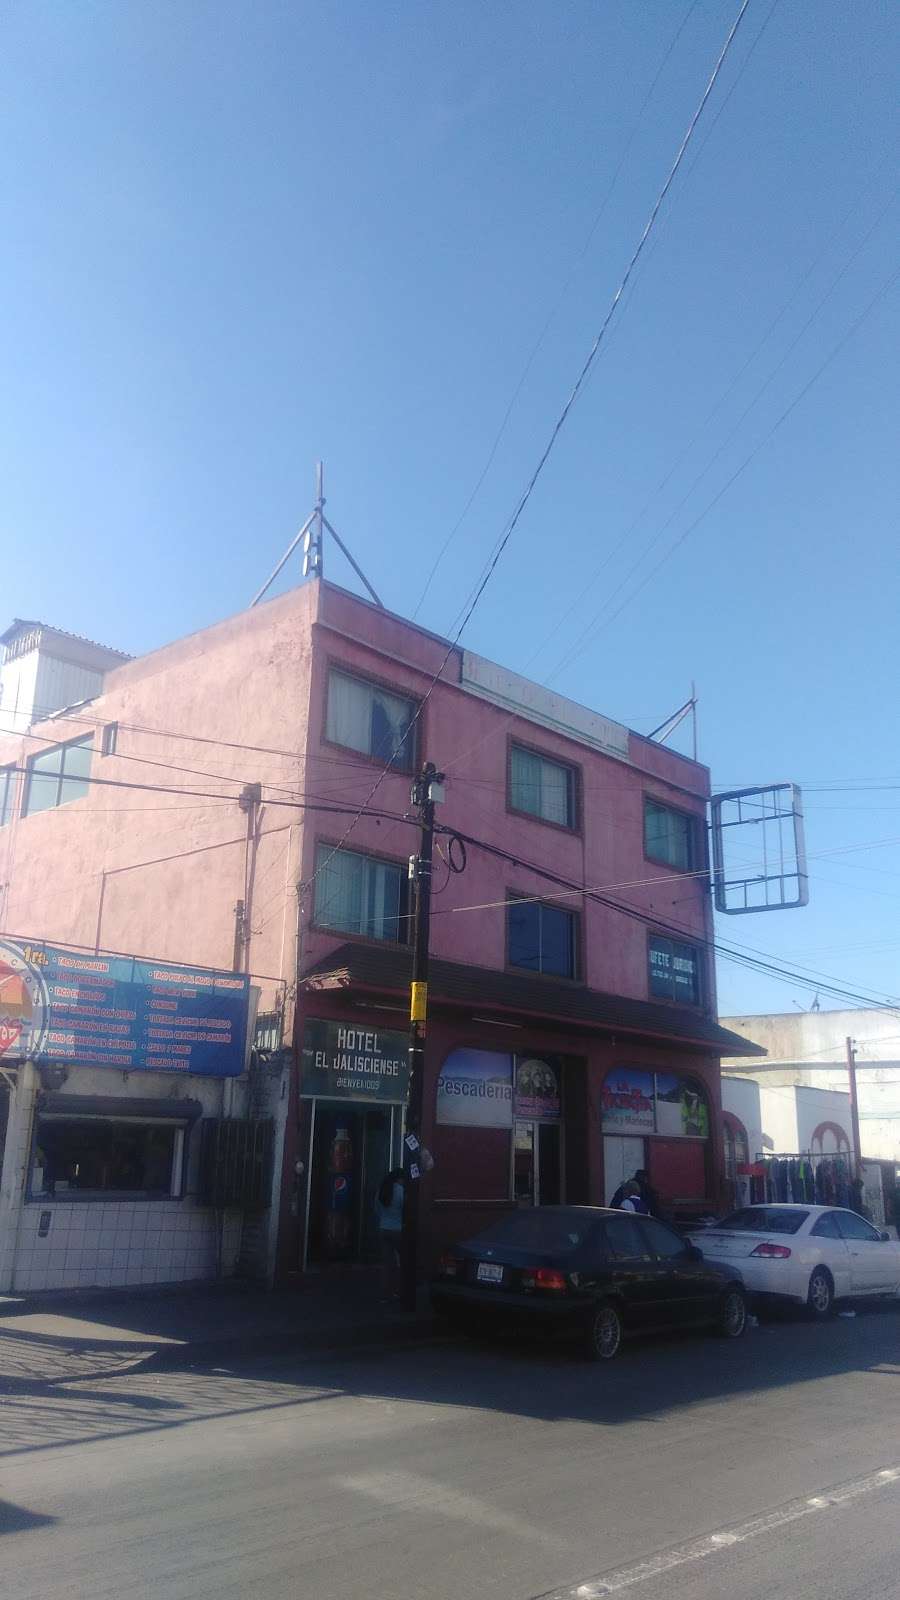 HOTEL EL JALISCIENCE | Calle Primera 1713, Zona Centro, 22000 Tijuana, B.C., Mexico | Phone: 664 685 3491